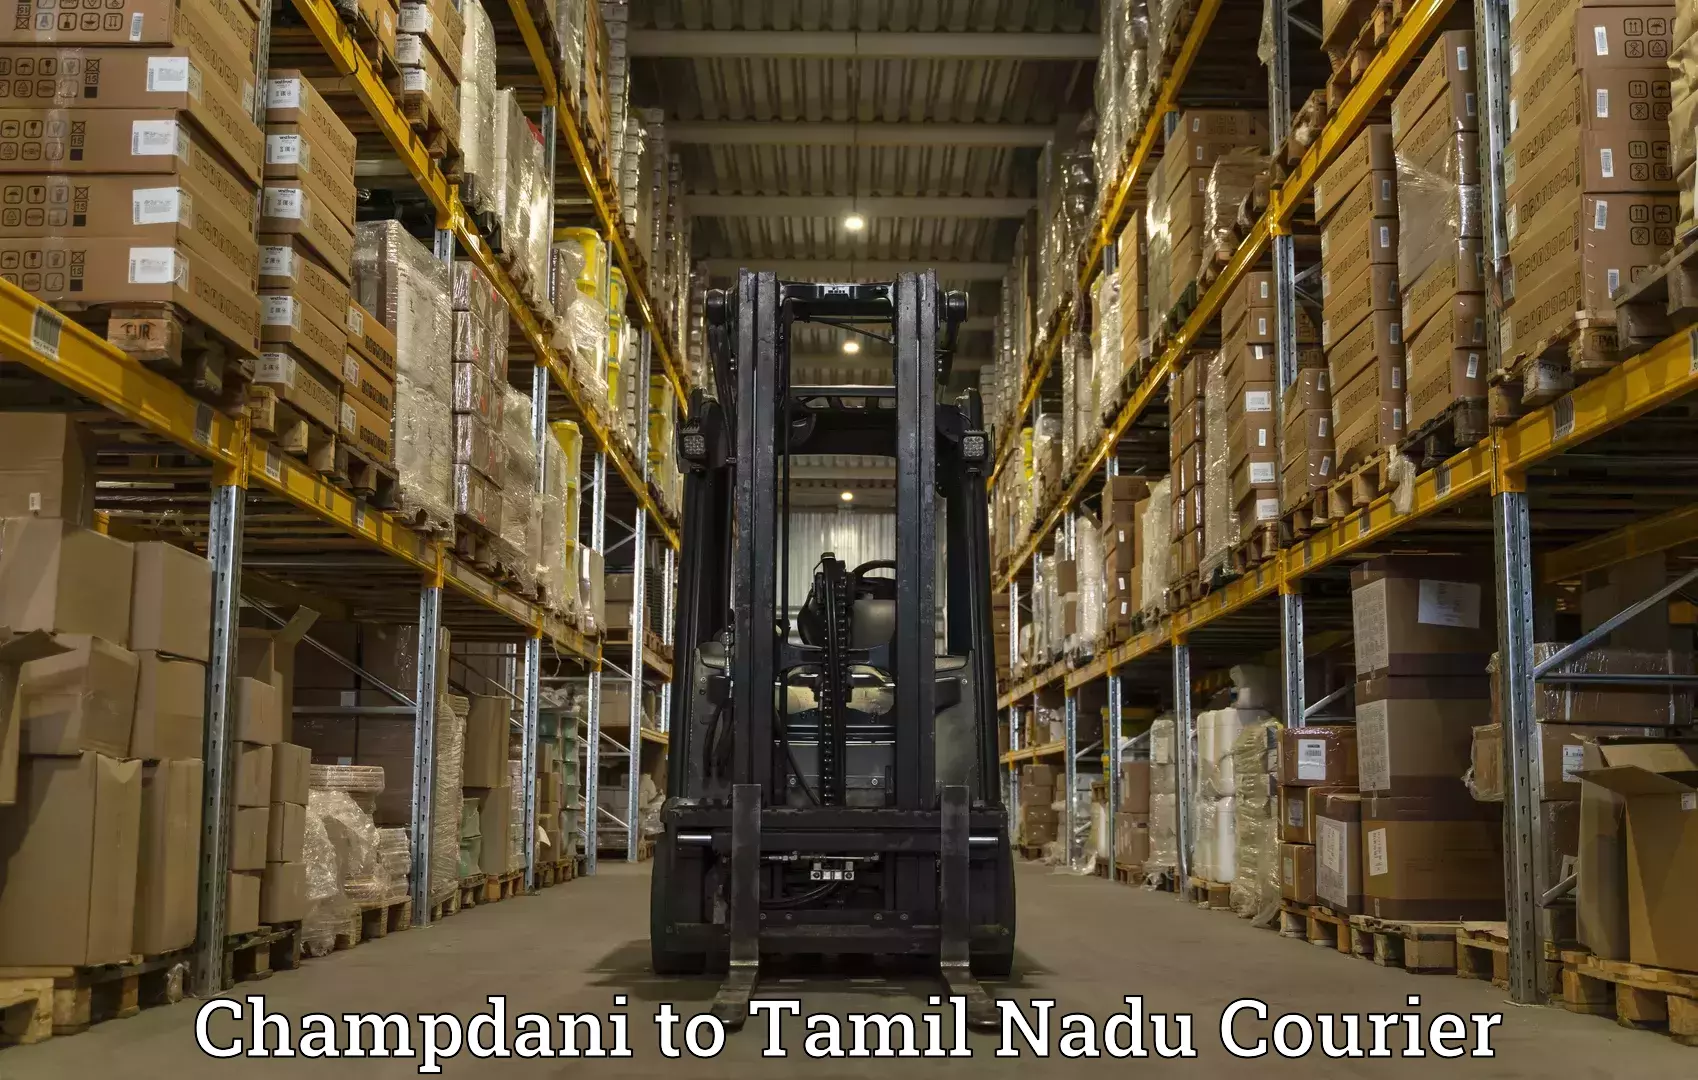 Fast delivery service Champdani to Tamil Nadu